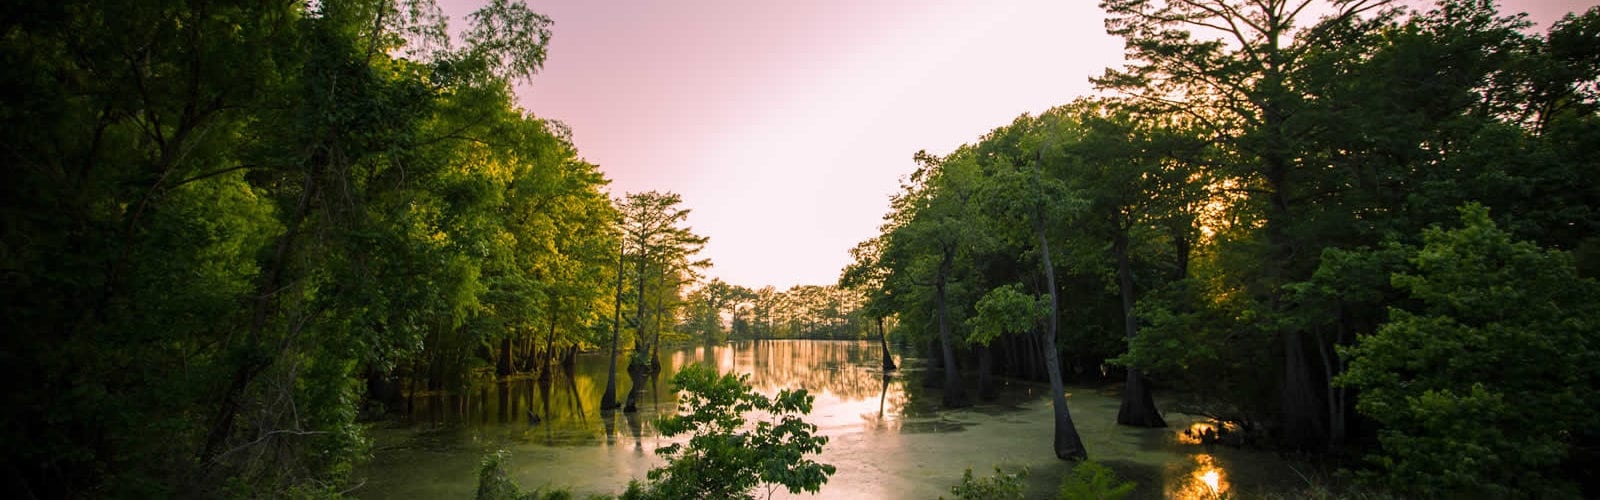 bayou-louisianne-mississippi-marecages-alligators-plantations-une